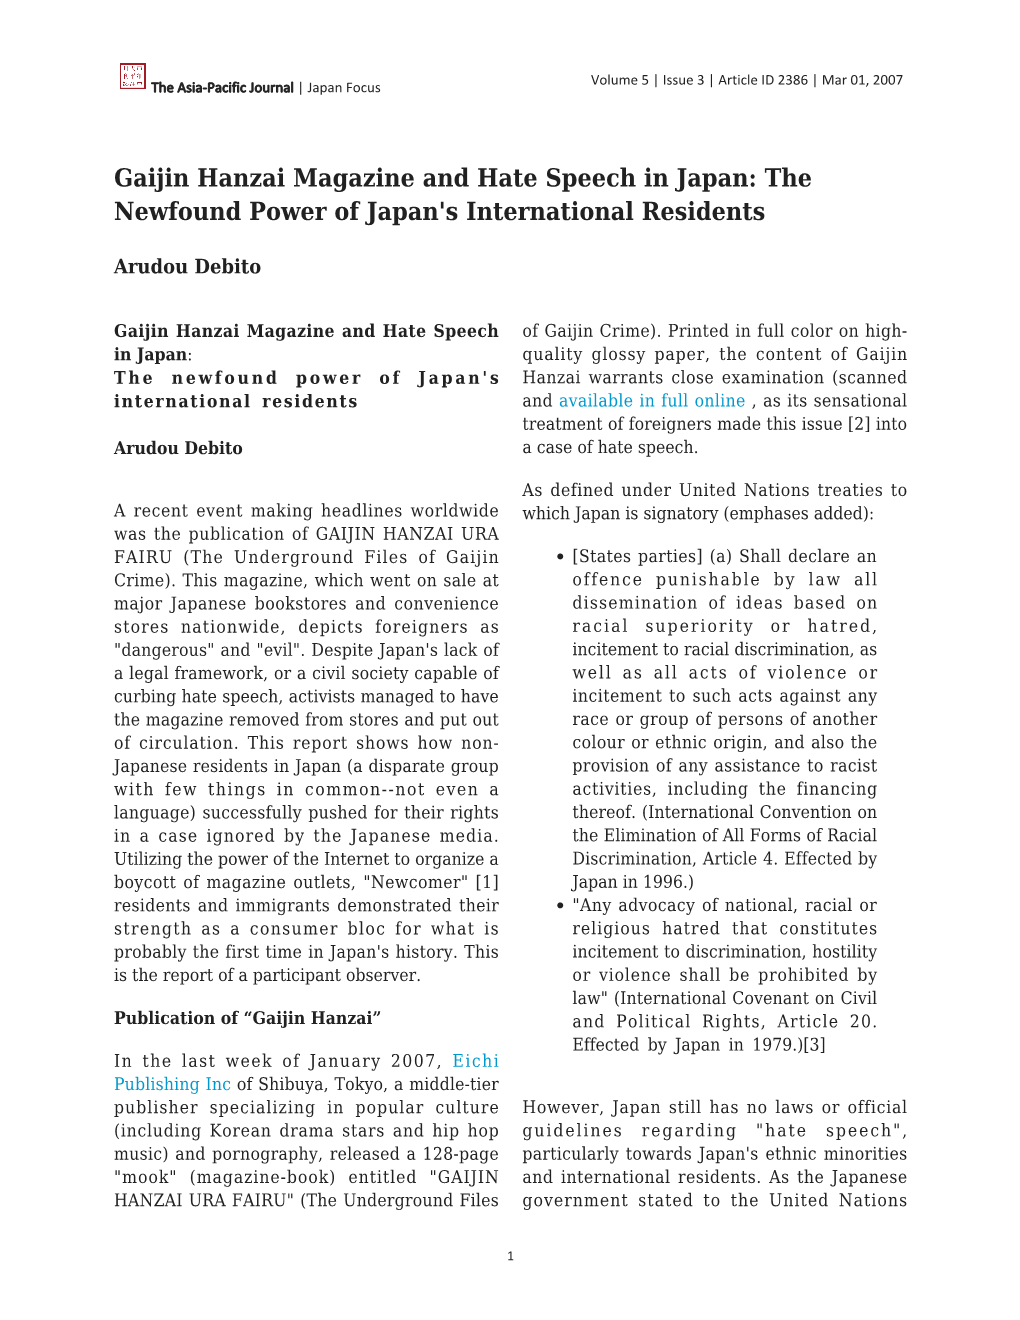 Gaijin Hanzai Magazine and Hate Speech in Japan: the Newfound Power of Japan's International Residents